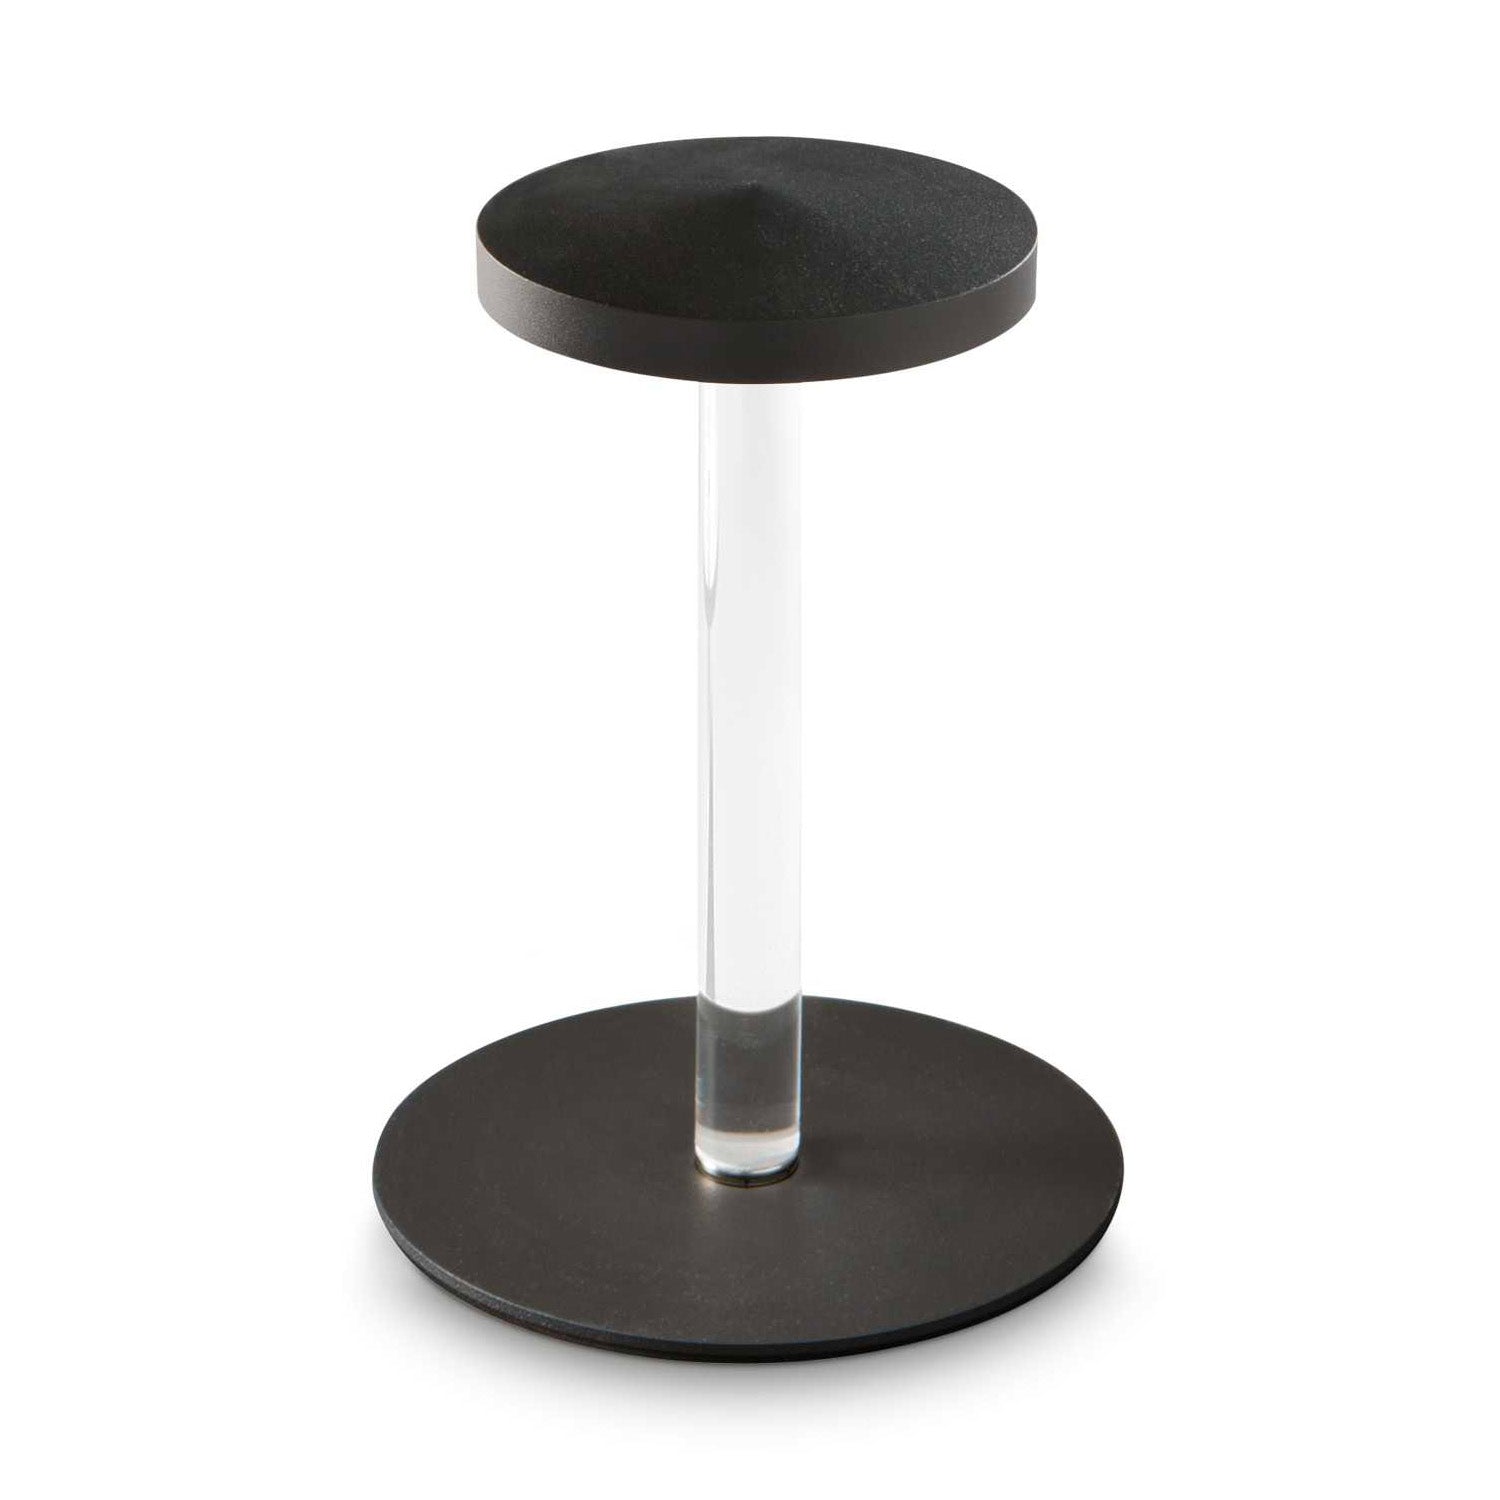 TOKI - Contemporary cordless table lamp